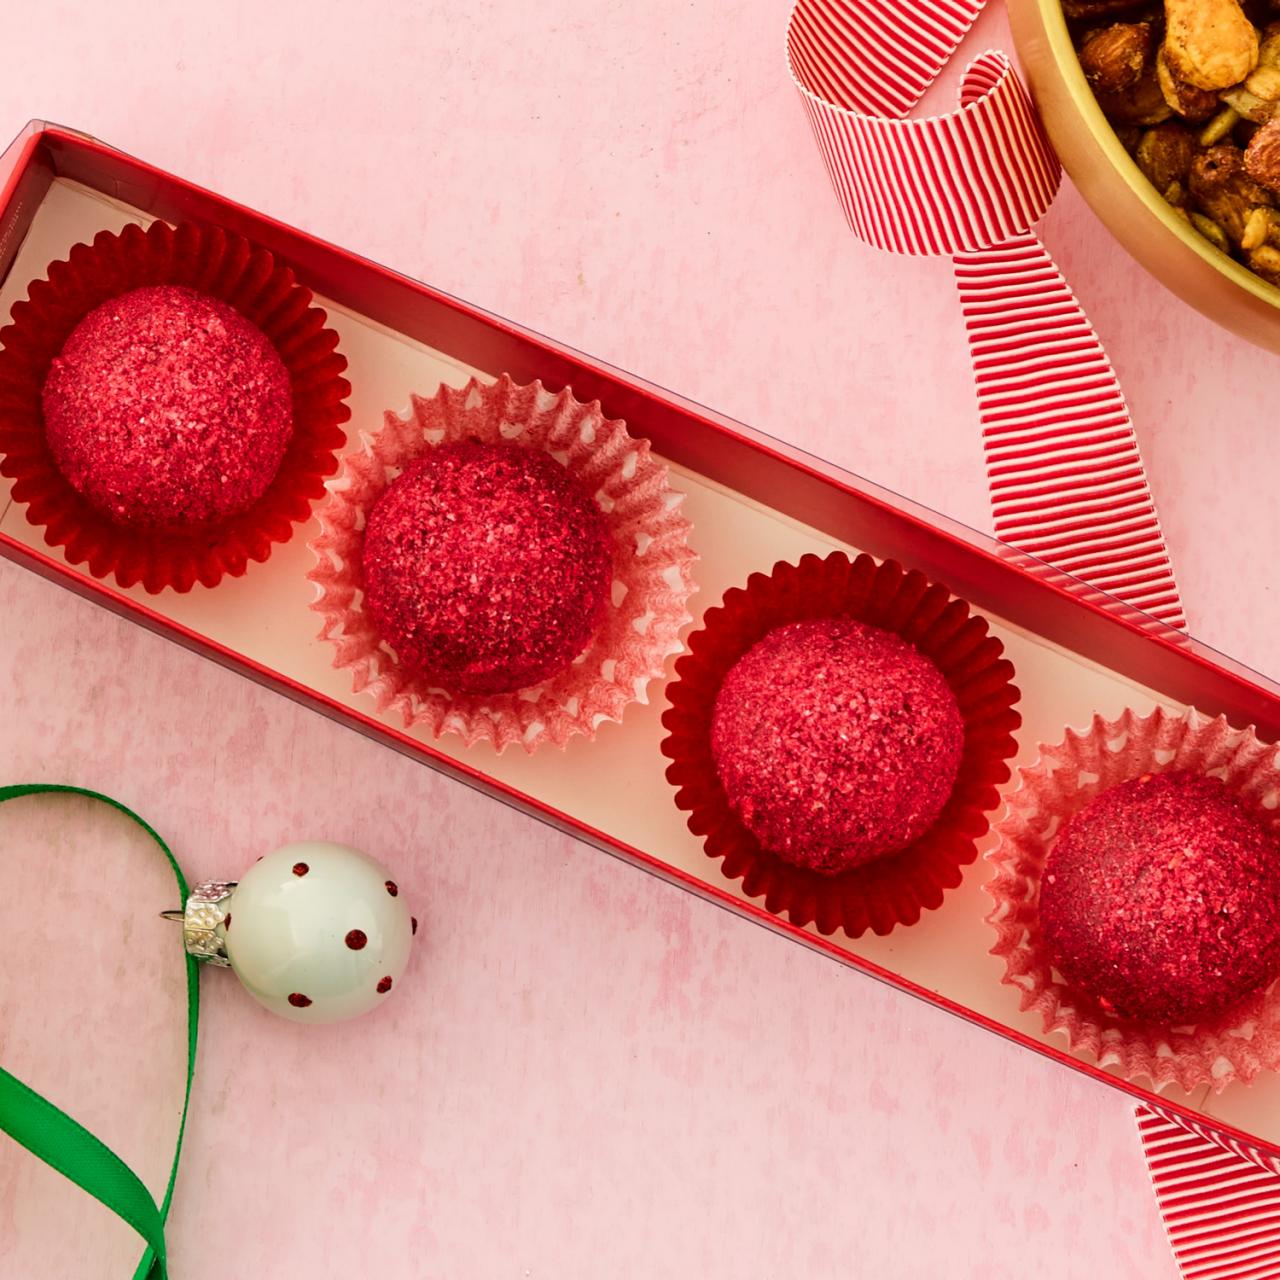 My Top 16 Christmas gift baking ideas - Eat Good 4 Life